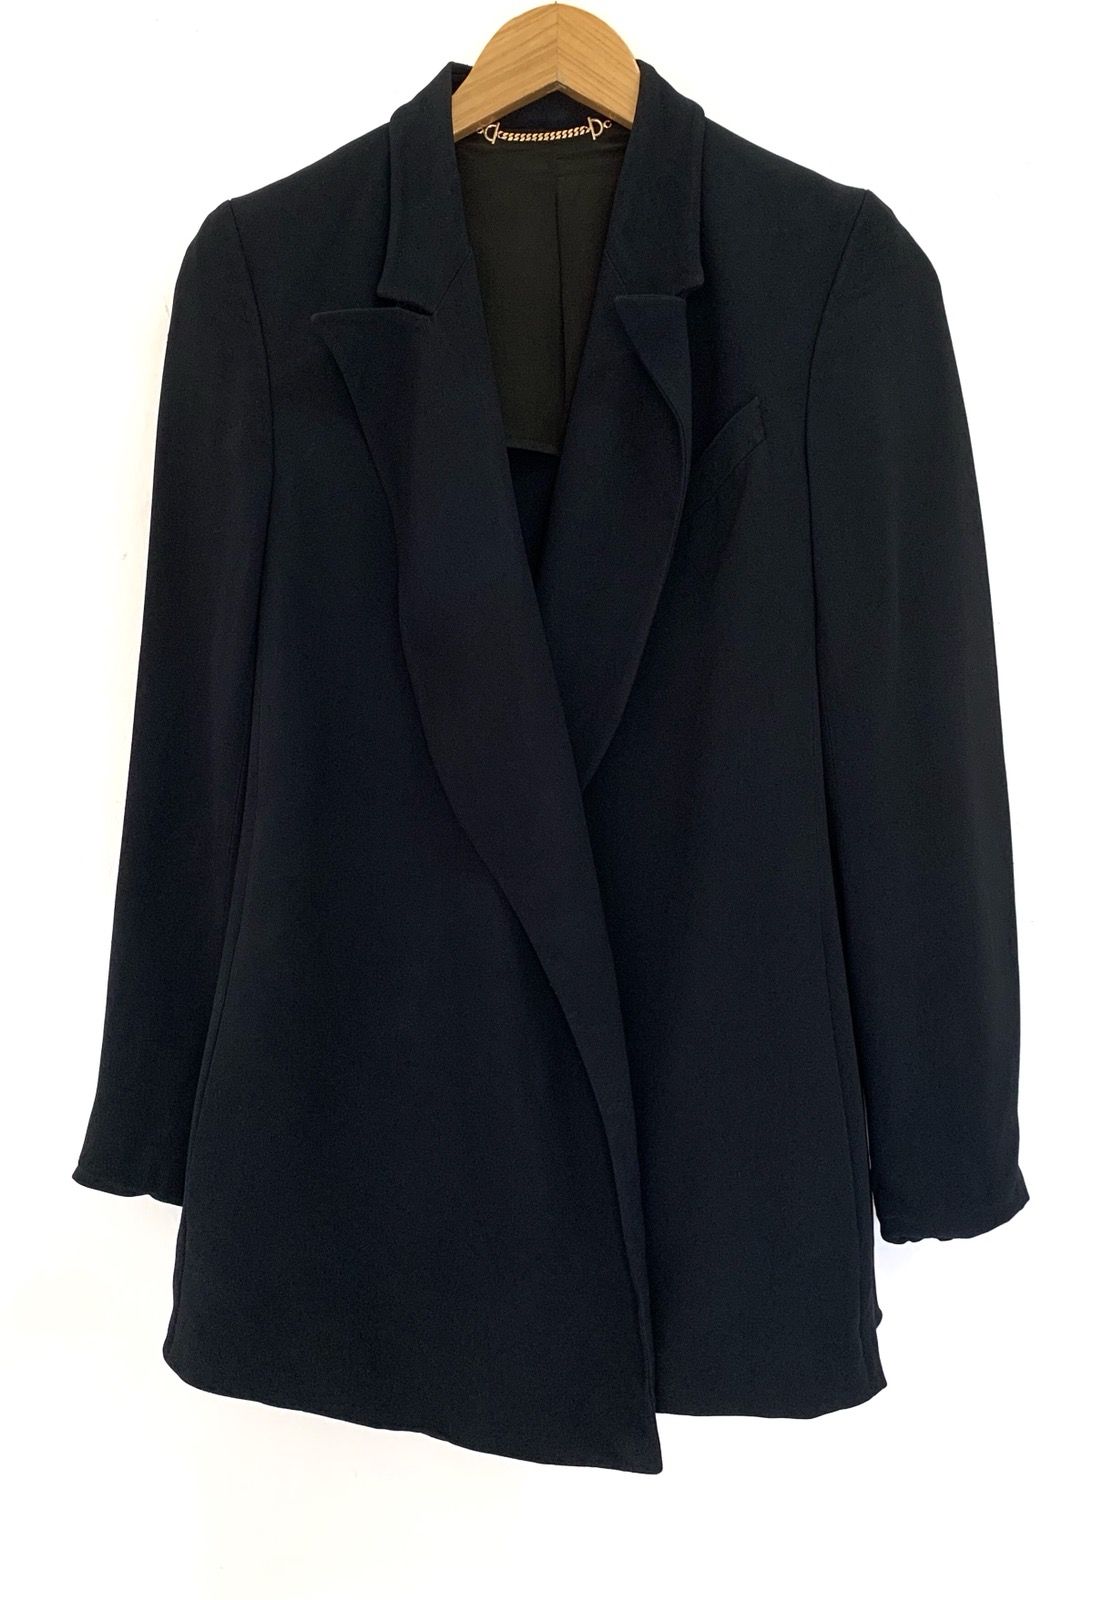 Gucci GUCCI Black Cardigan Blazer Jacket Size US S / EU 44-46 / 1 - 1 Preview